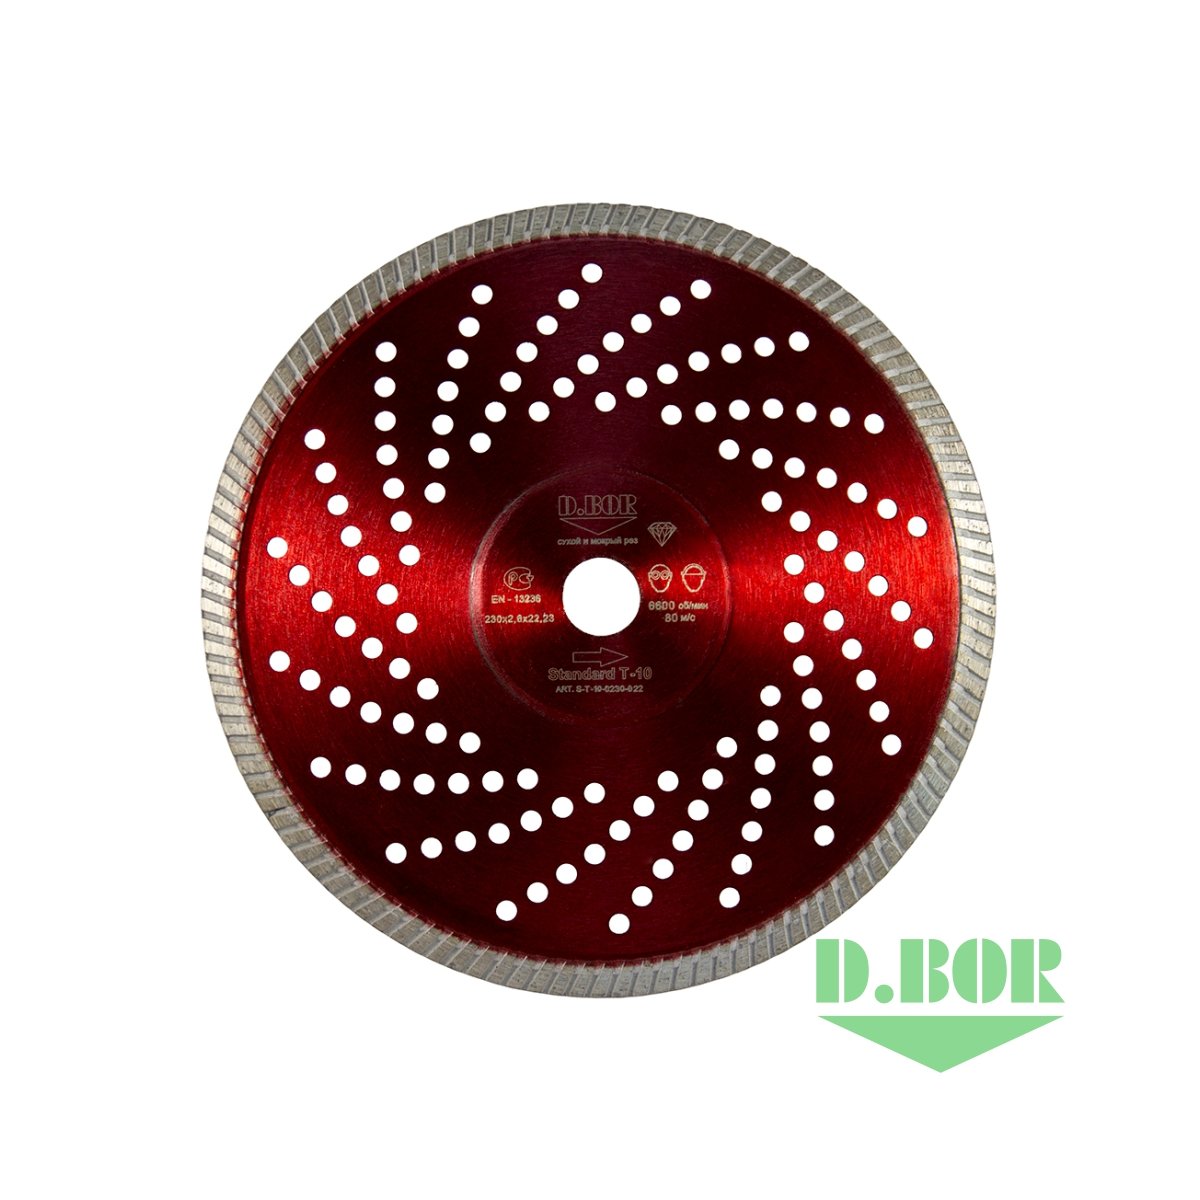 Алмазный диск Standard T-10, 350x3,2x25,40 (арт. S-T-10-0350-025) "D.BOR"